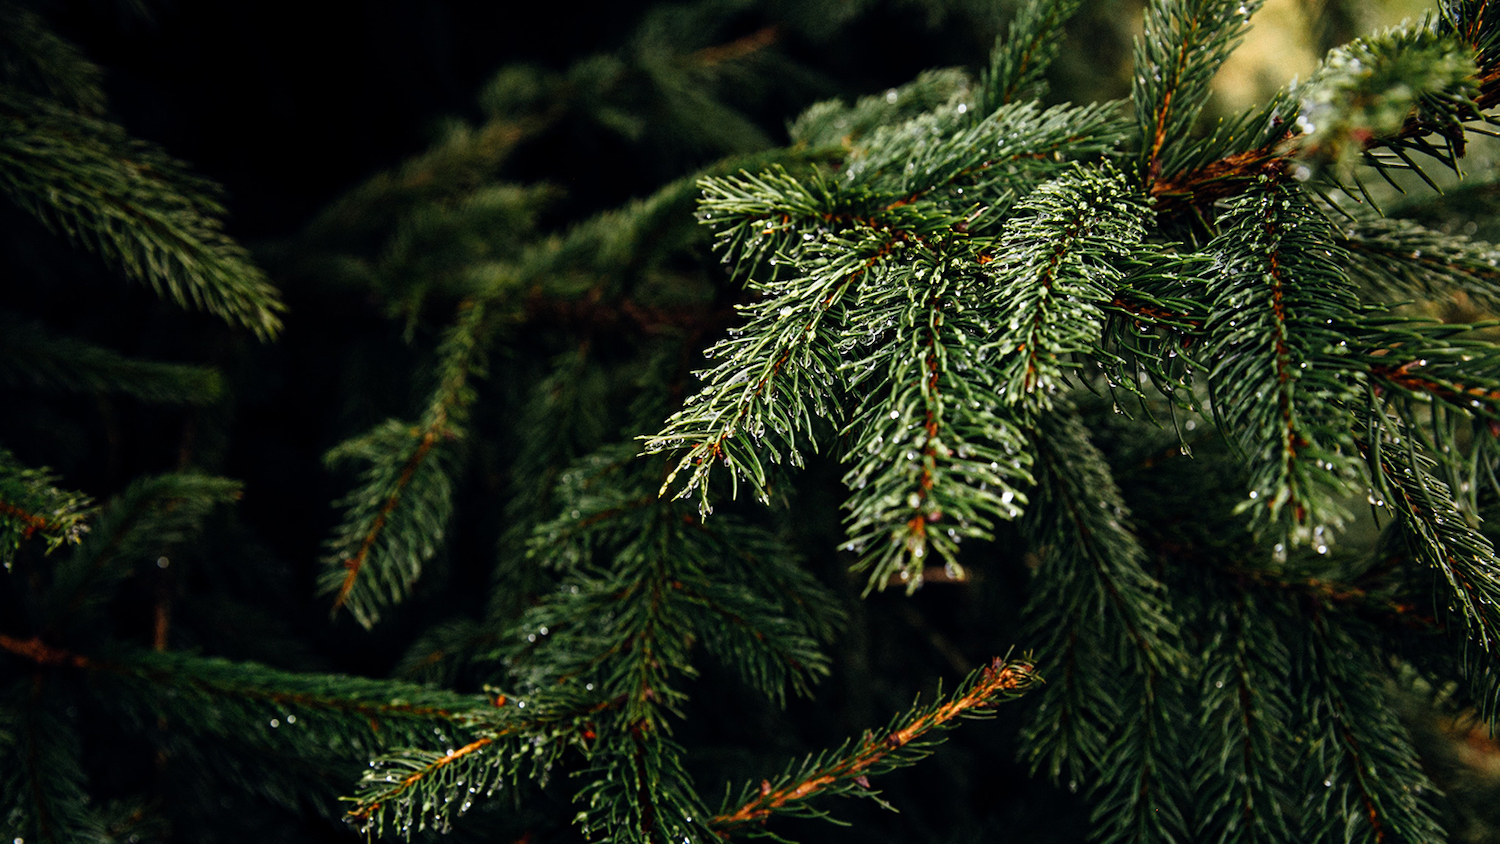 How to Keep Your Christmas Tree Fresh